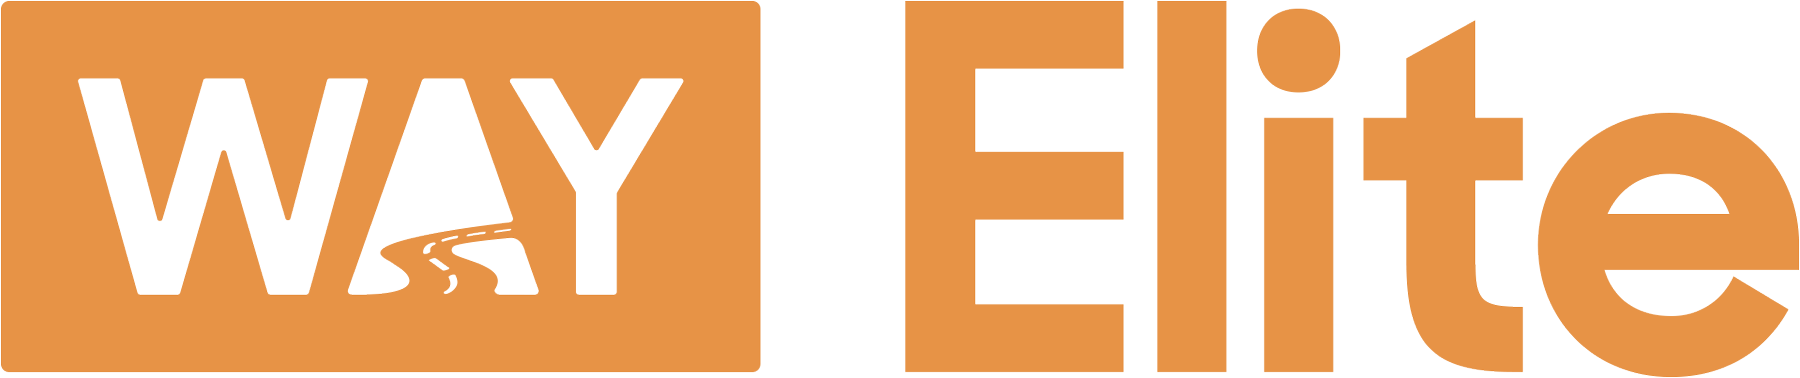 Way Elite logo